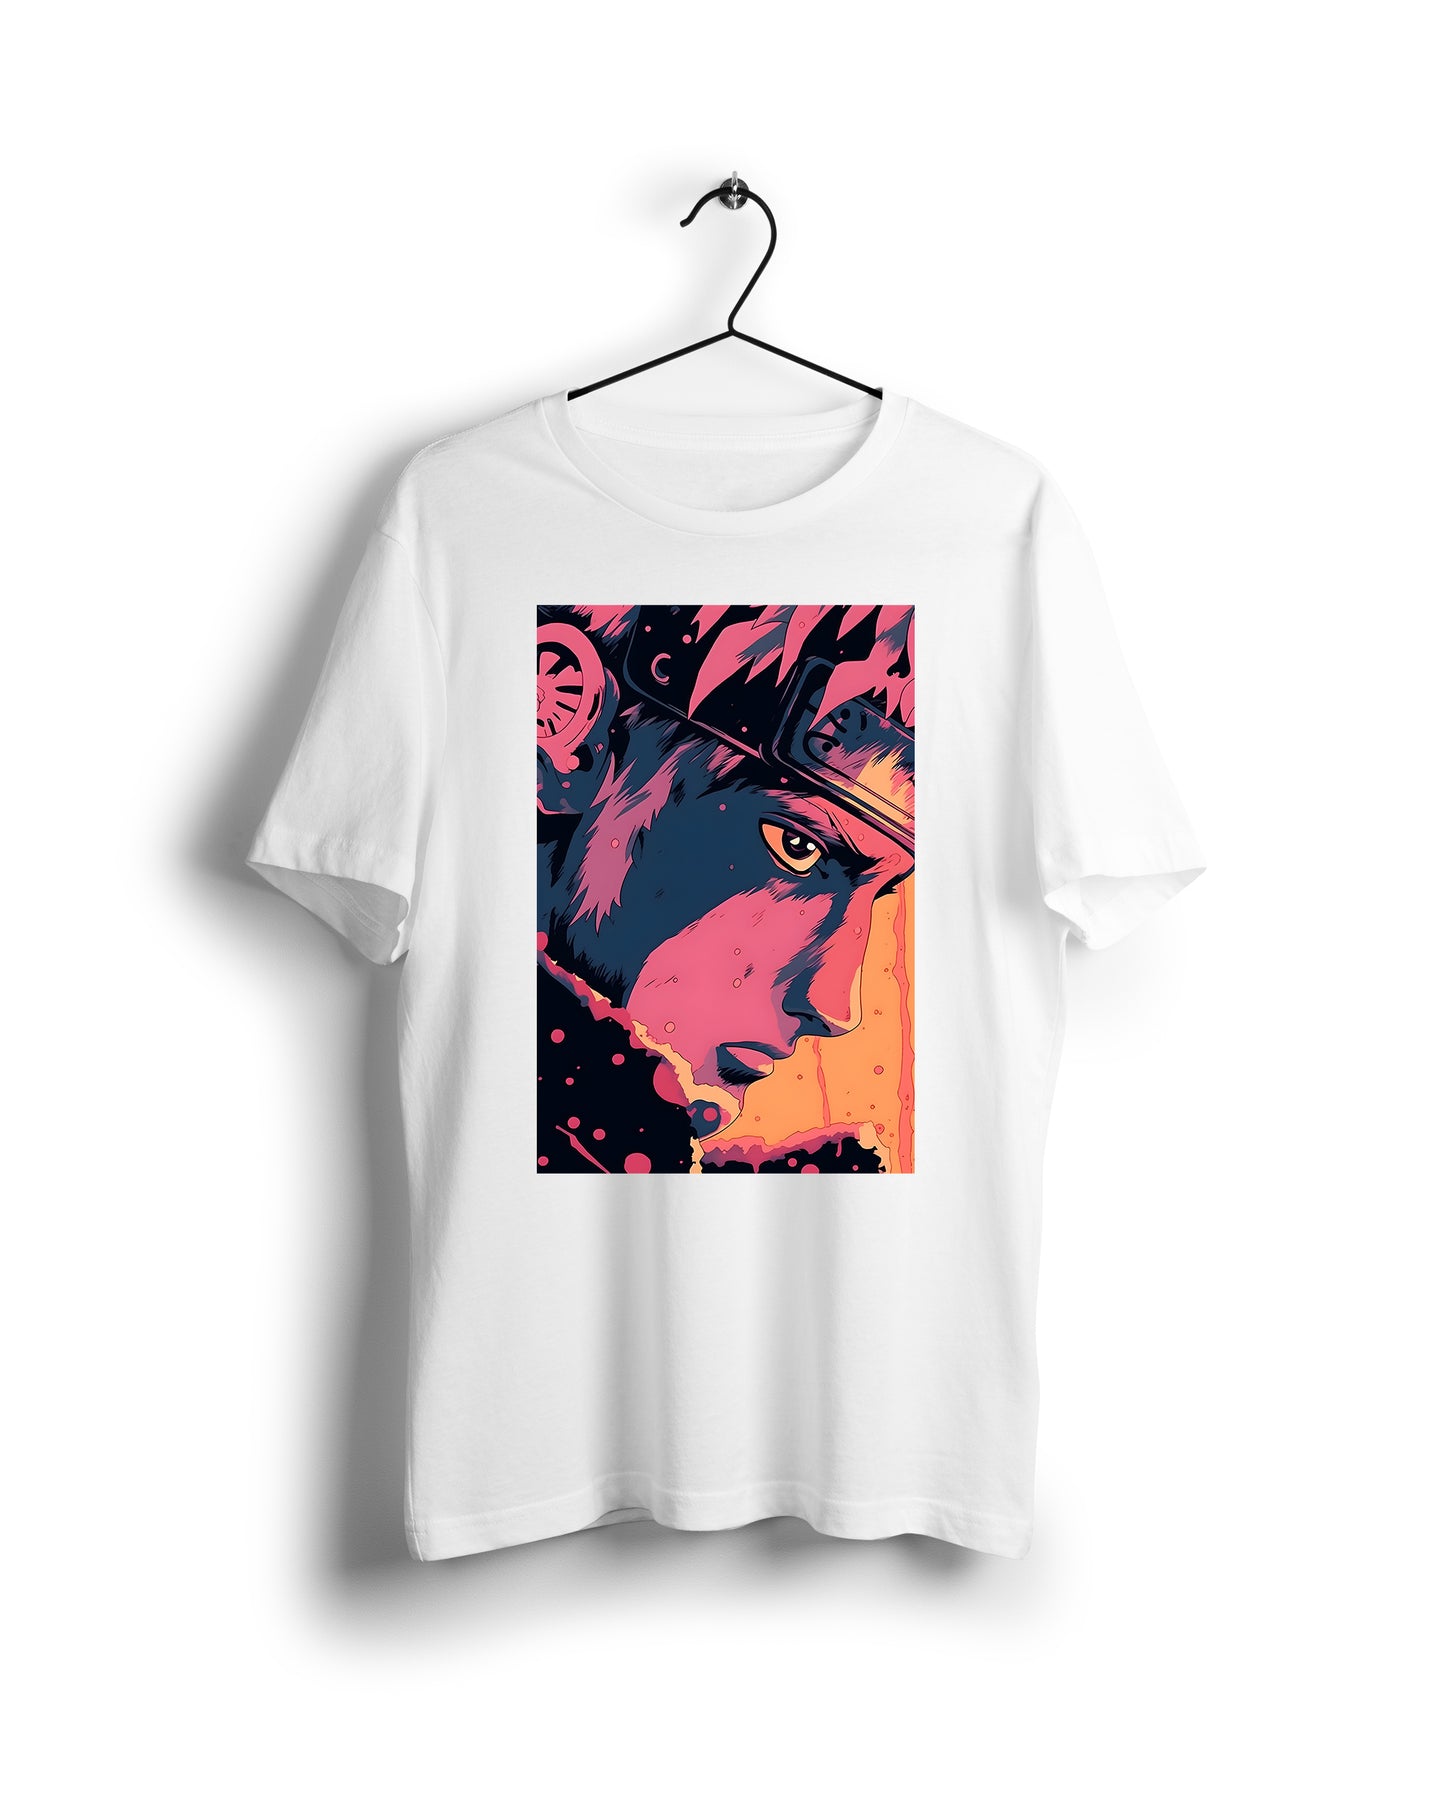 Naruto Uzumaki Collage Tee: Oda-Inspired Artwork Extravaganz - Digital Graphics Basic T-shirt White